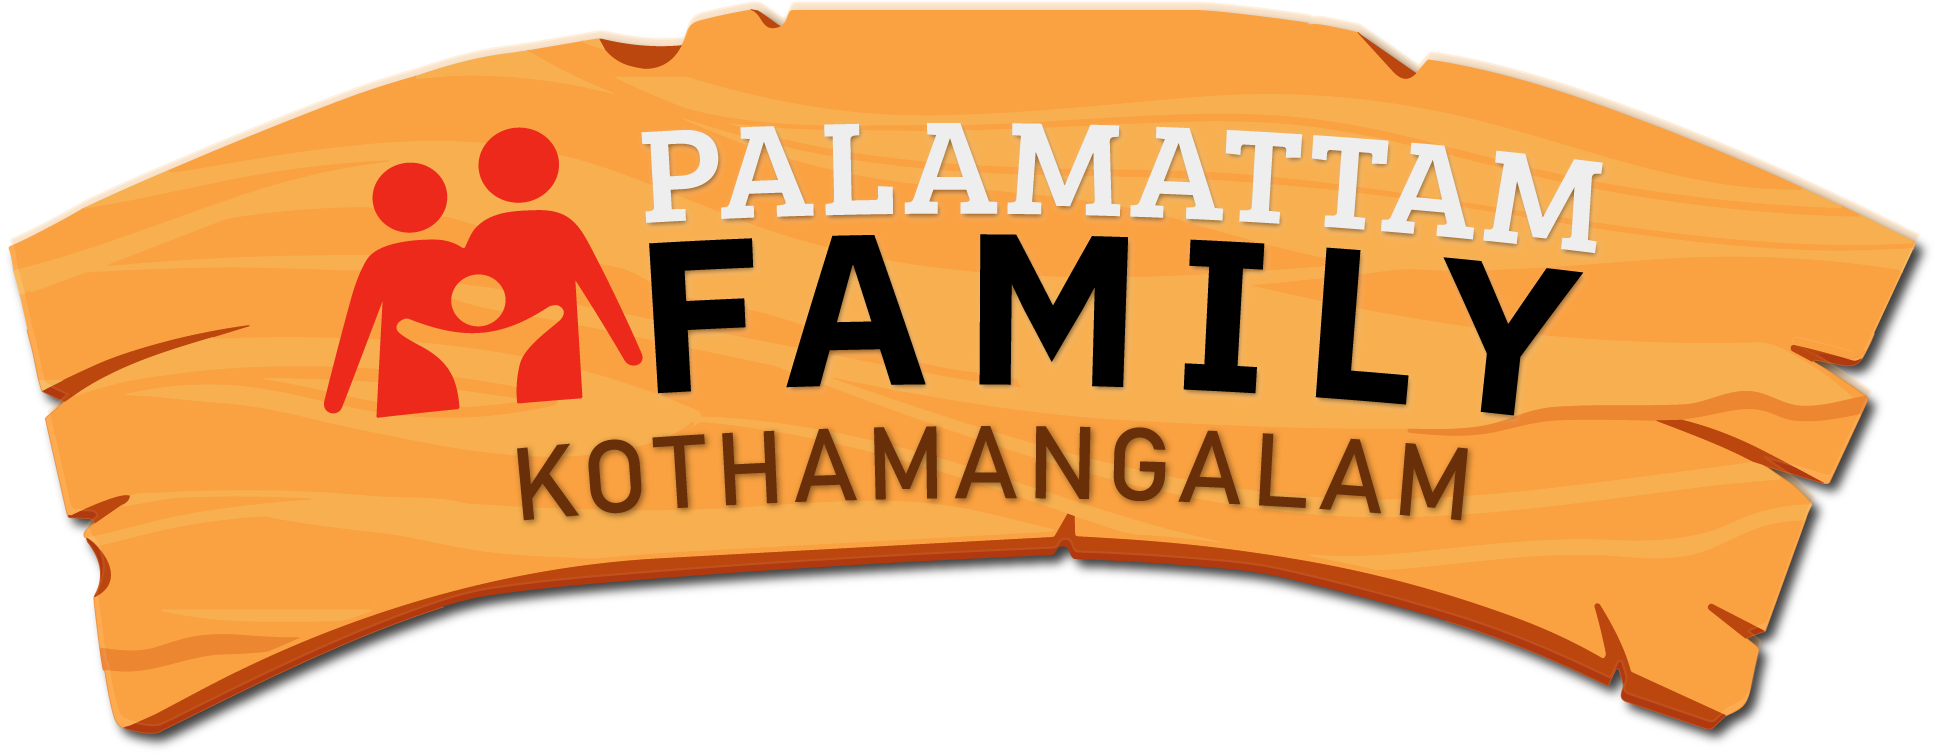 PALAMATTAM FAMILY